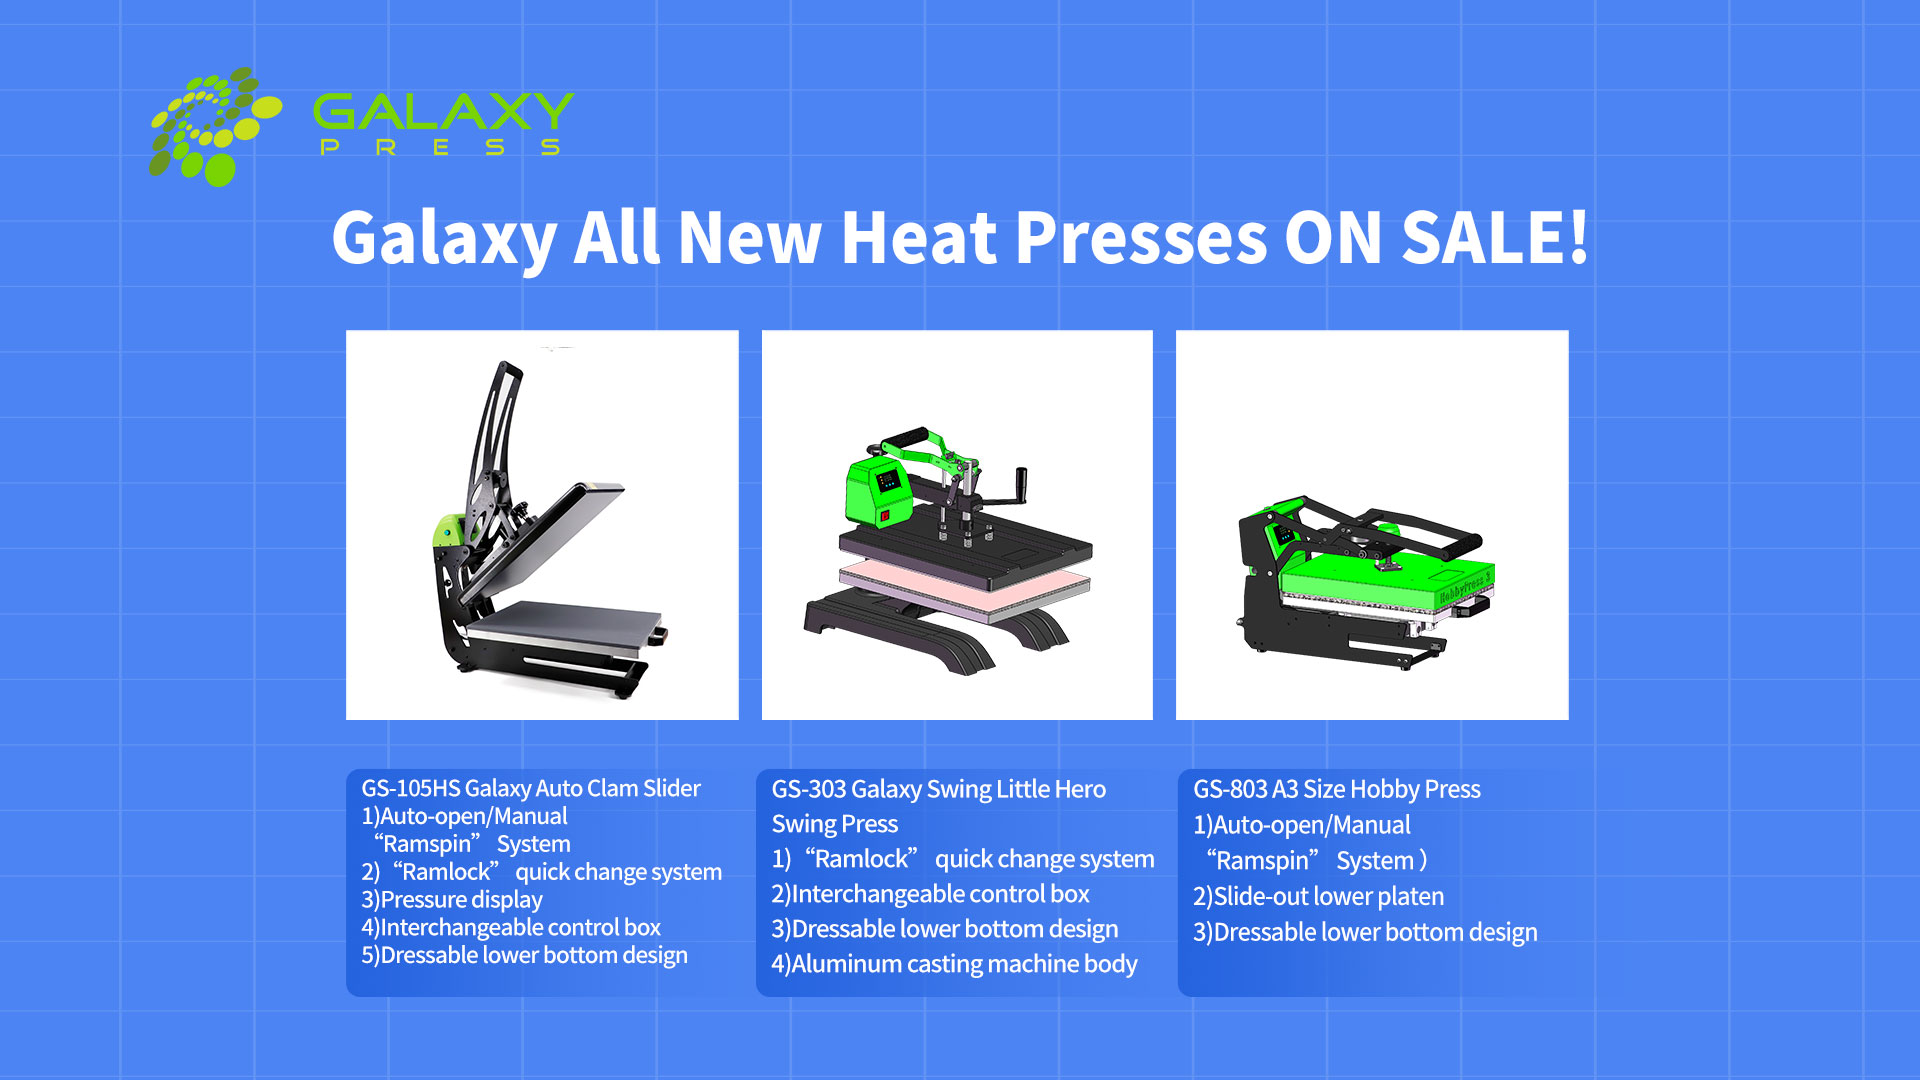 Galaxy All New Heat Presses are Put On Sale!